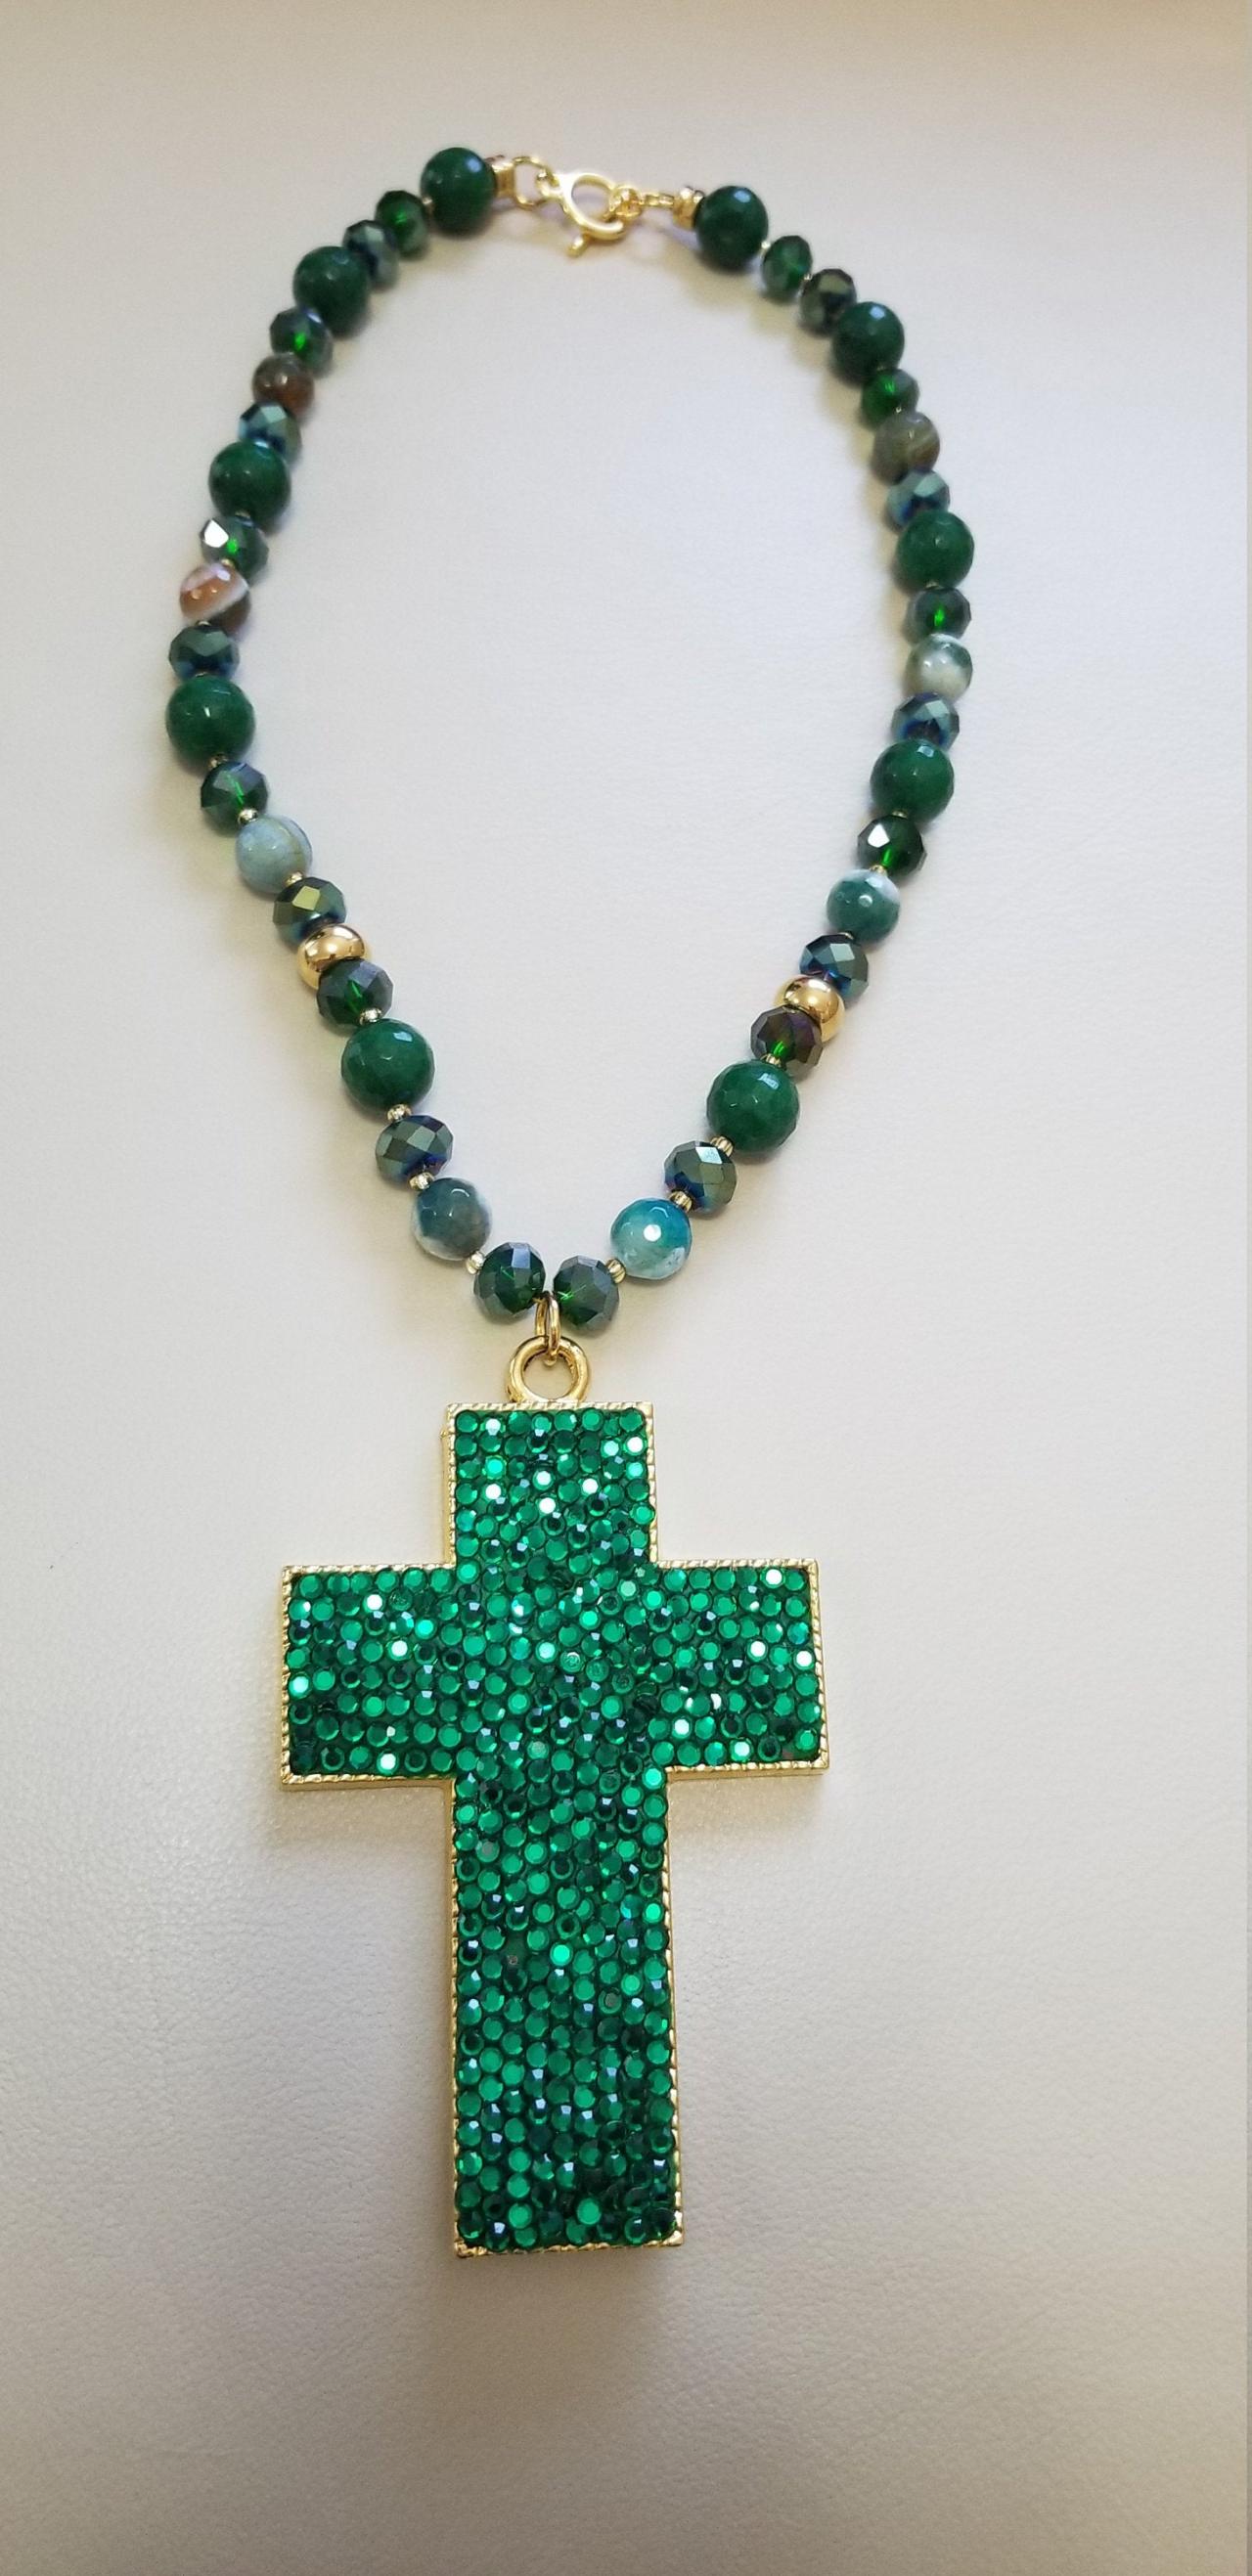 Handmade Swarovski crystal necklace and natural stones